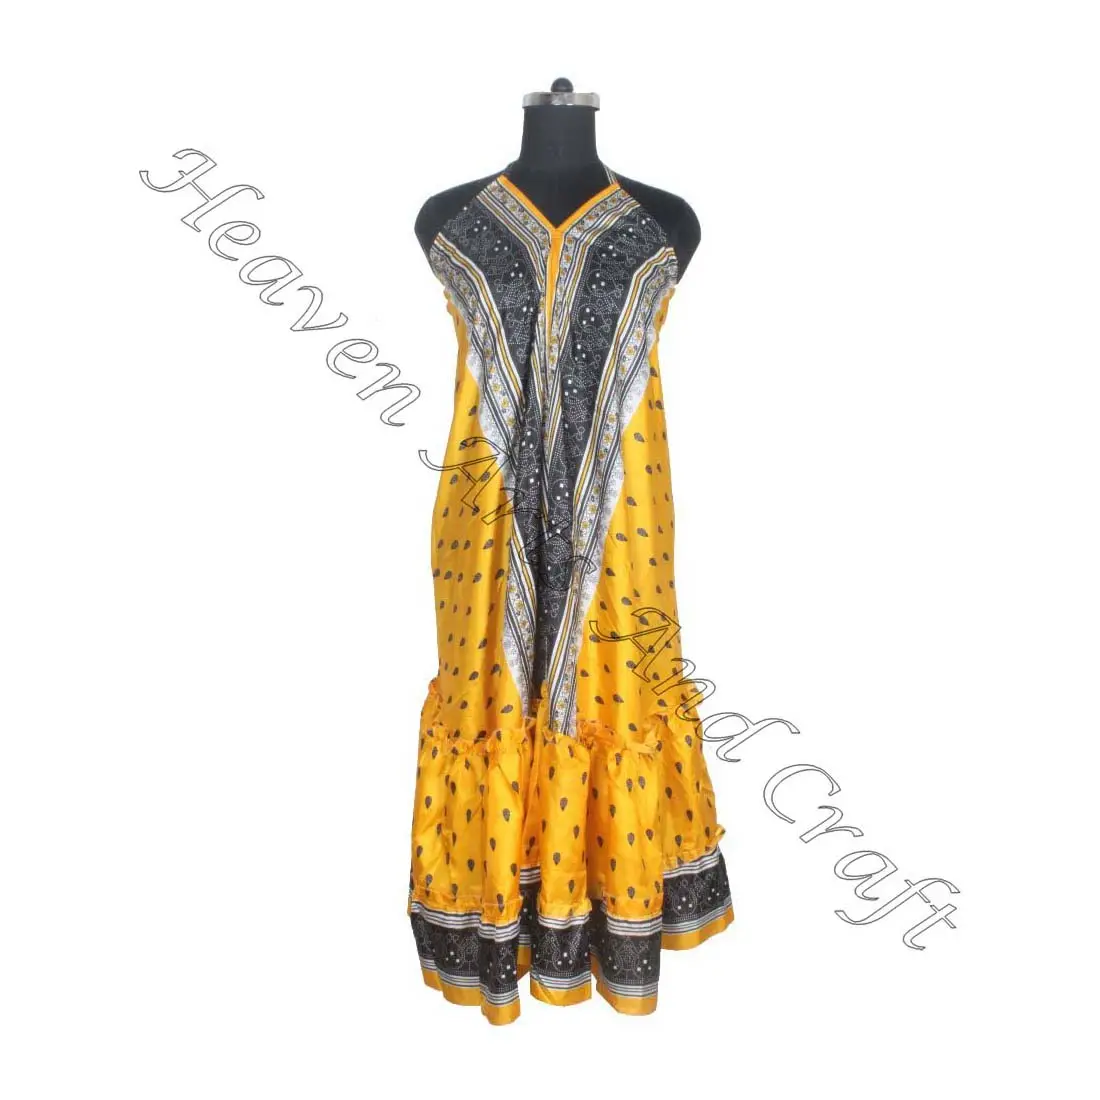 SD015 Saree / Sari / Shari Indian & Pakistani Clothing from India Hippy Boho Latest Traditional Long V-Neck Indian Vintage Sari